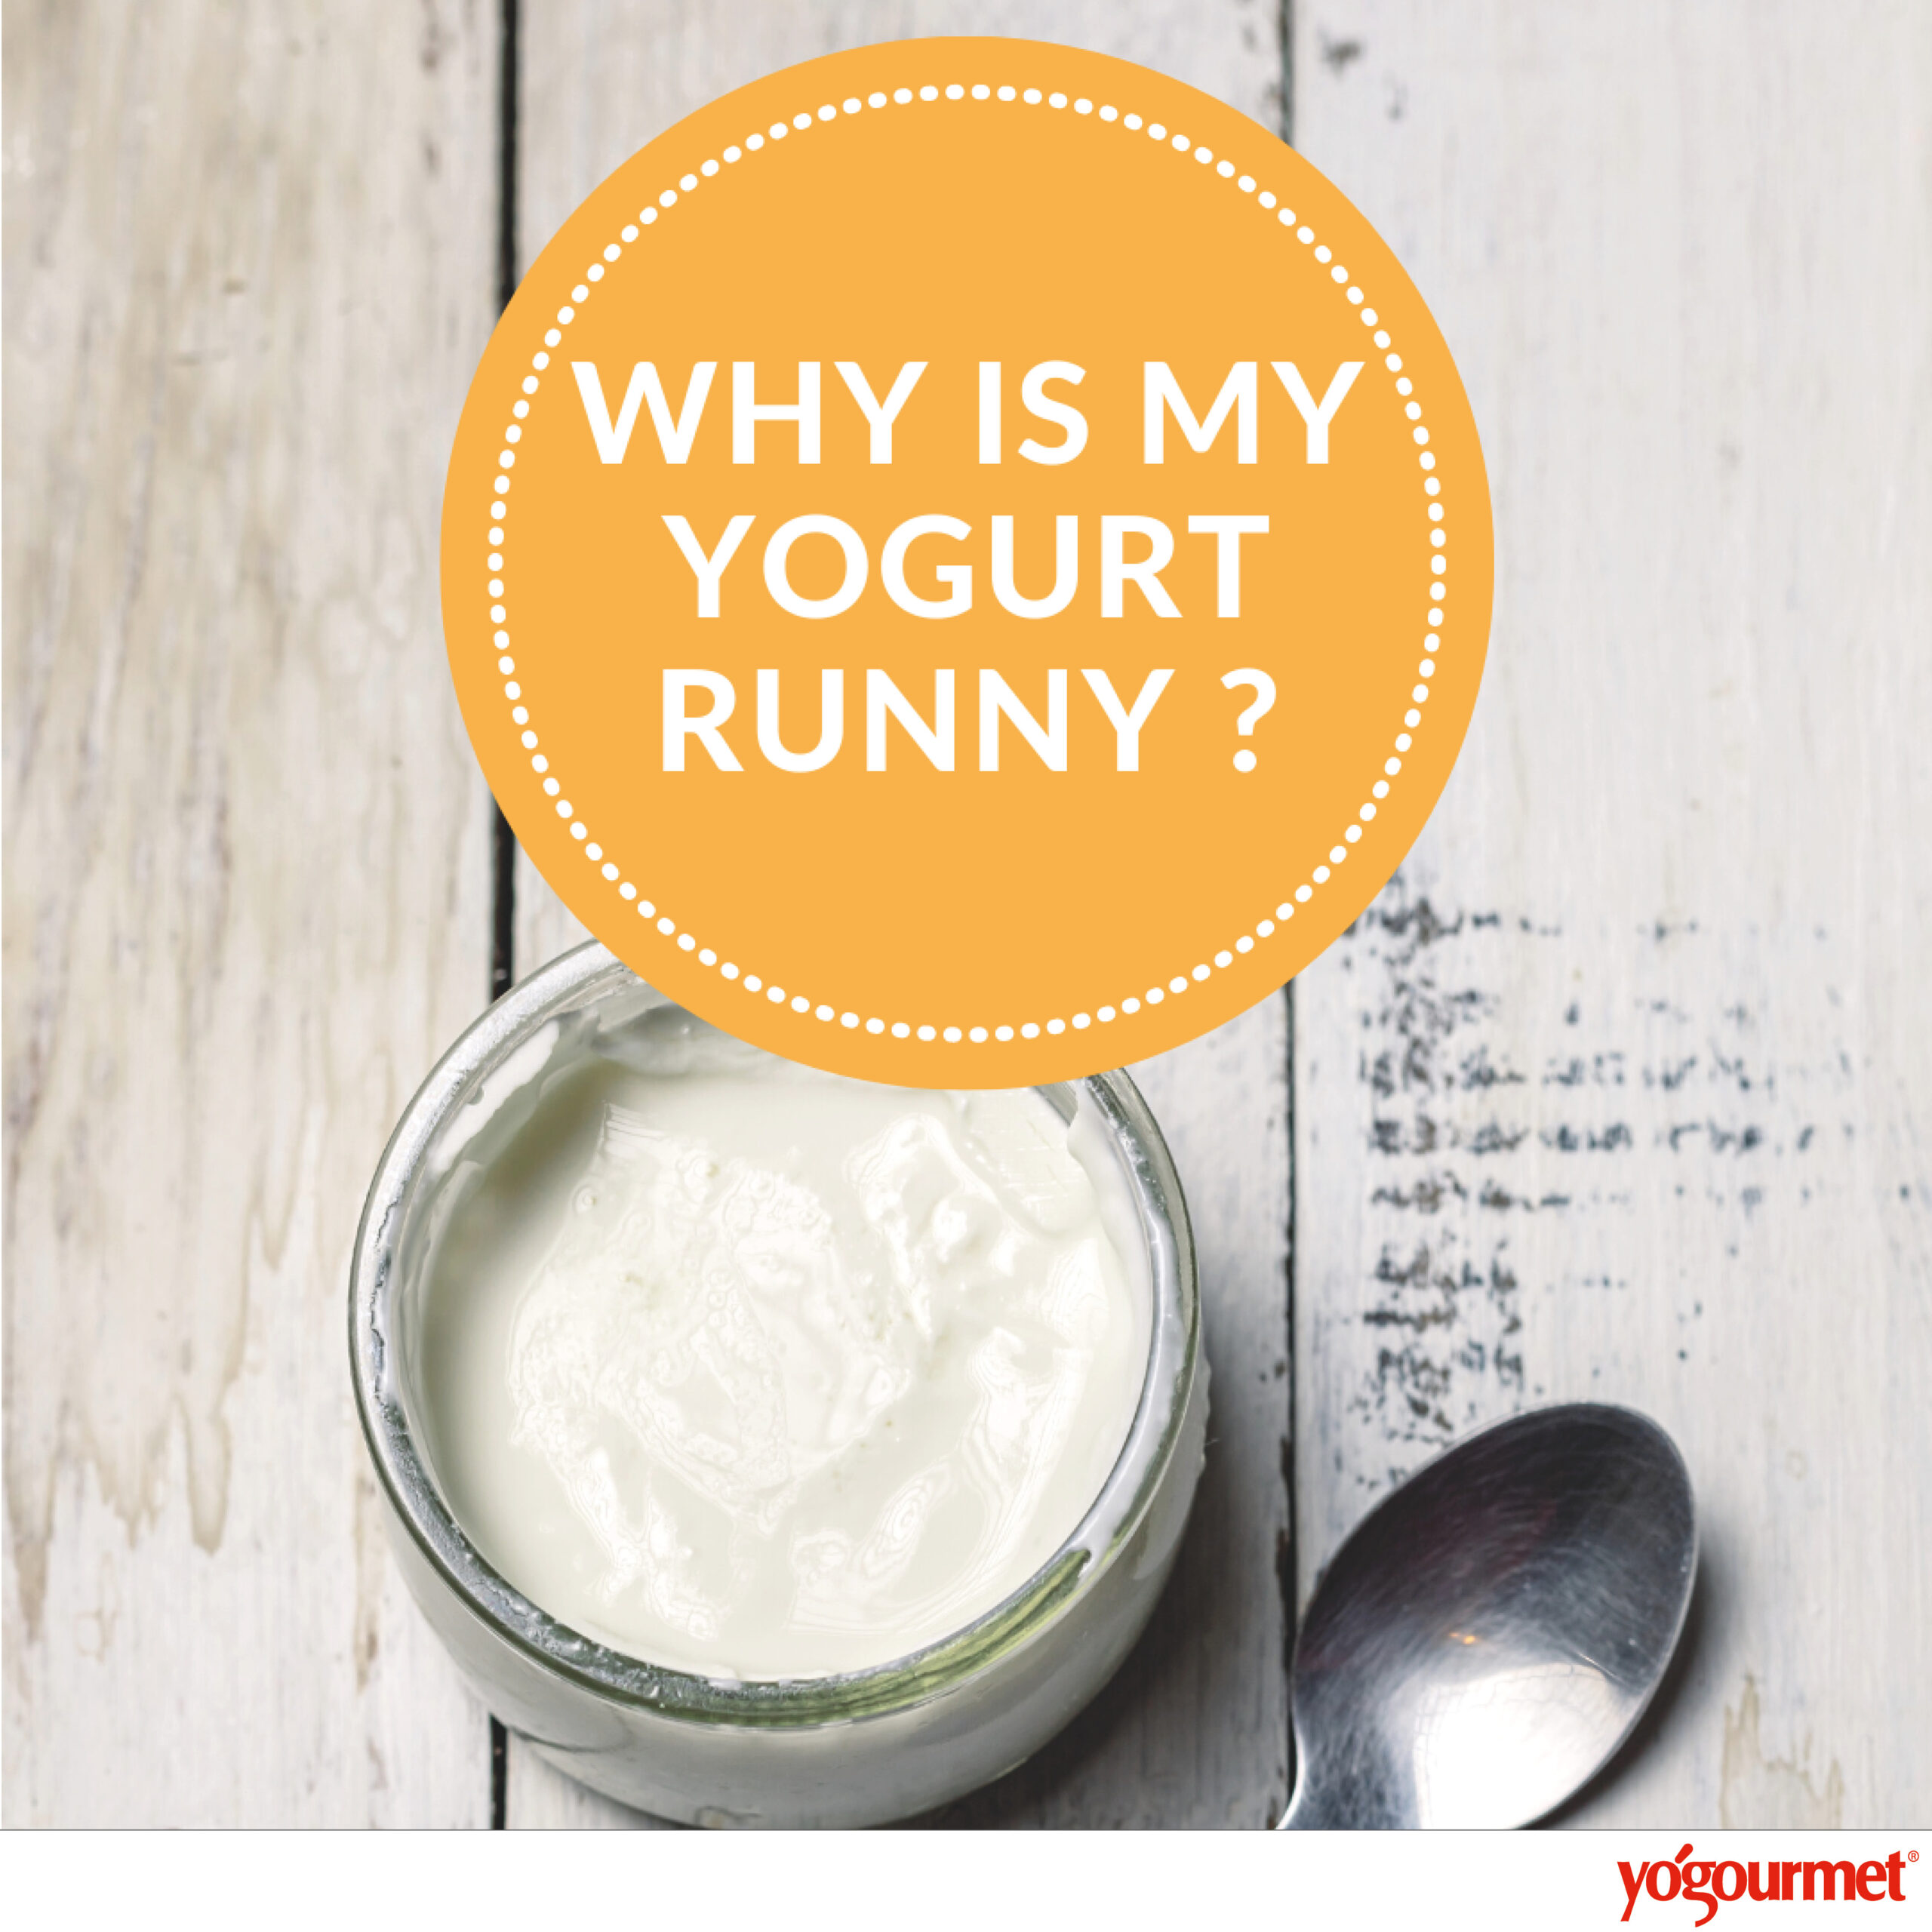 Experiencing runny yogurts?